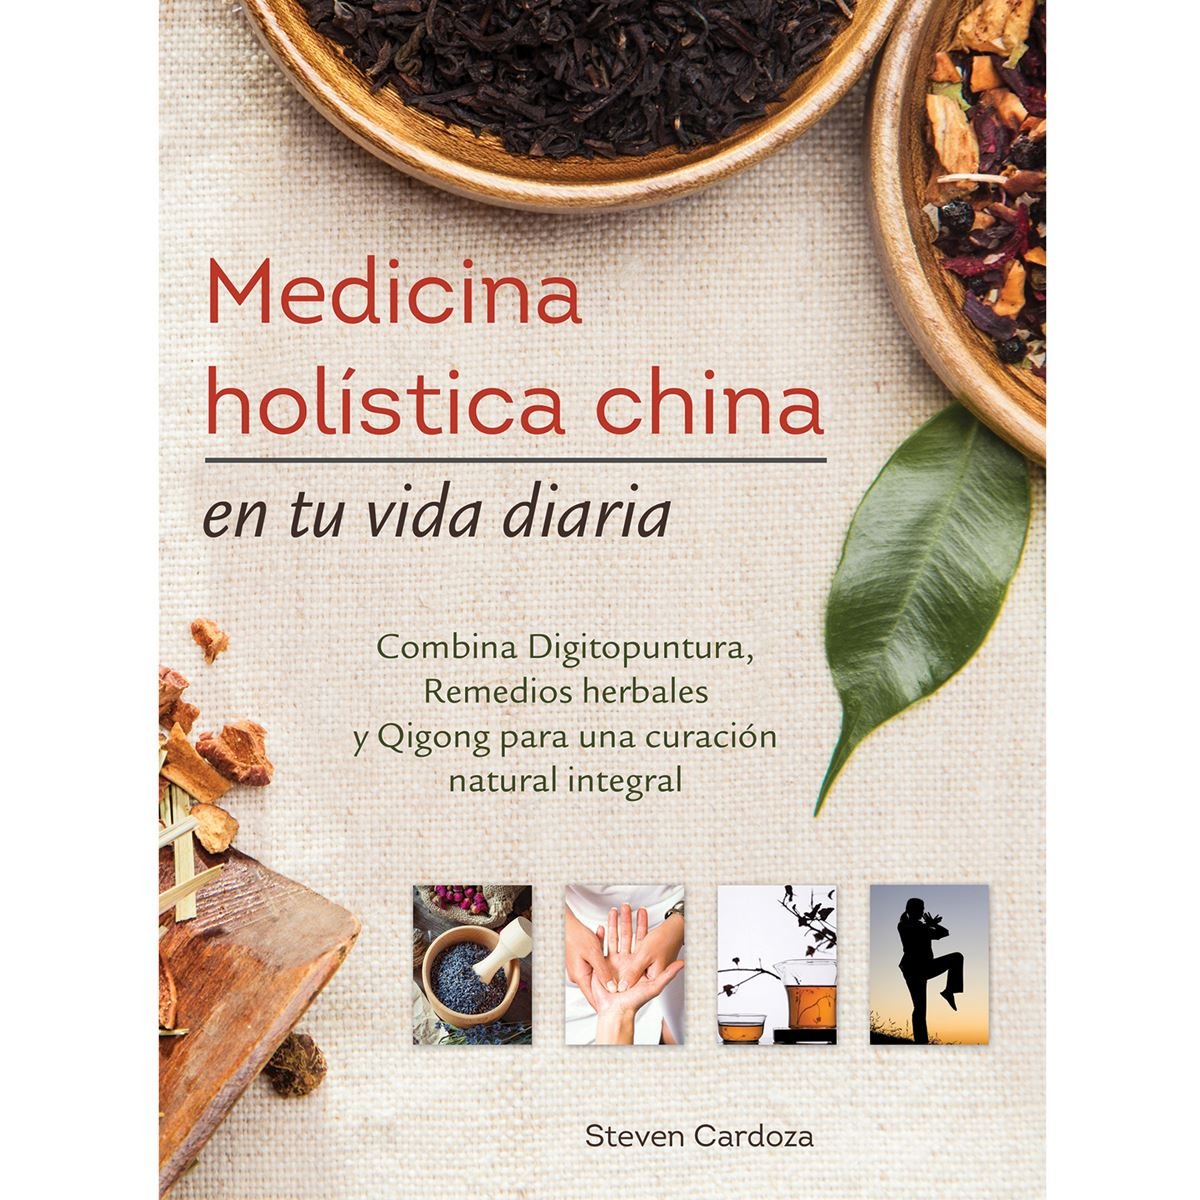 Medicina china holística